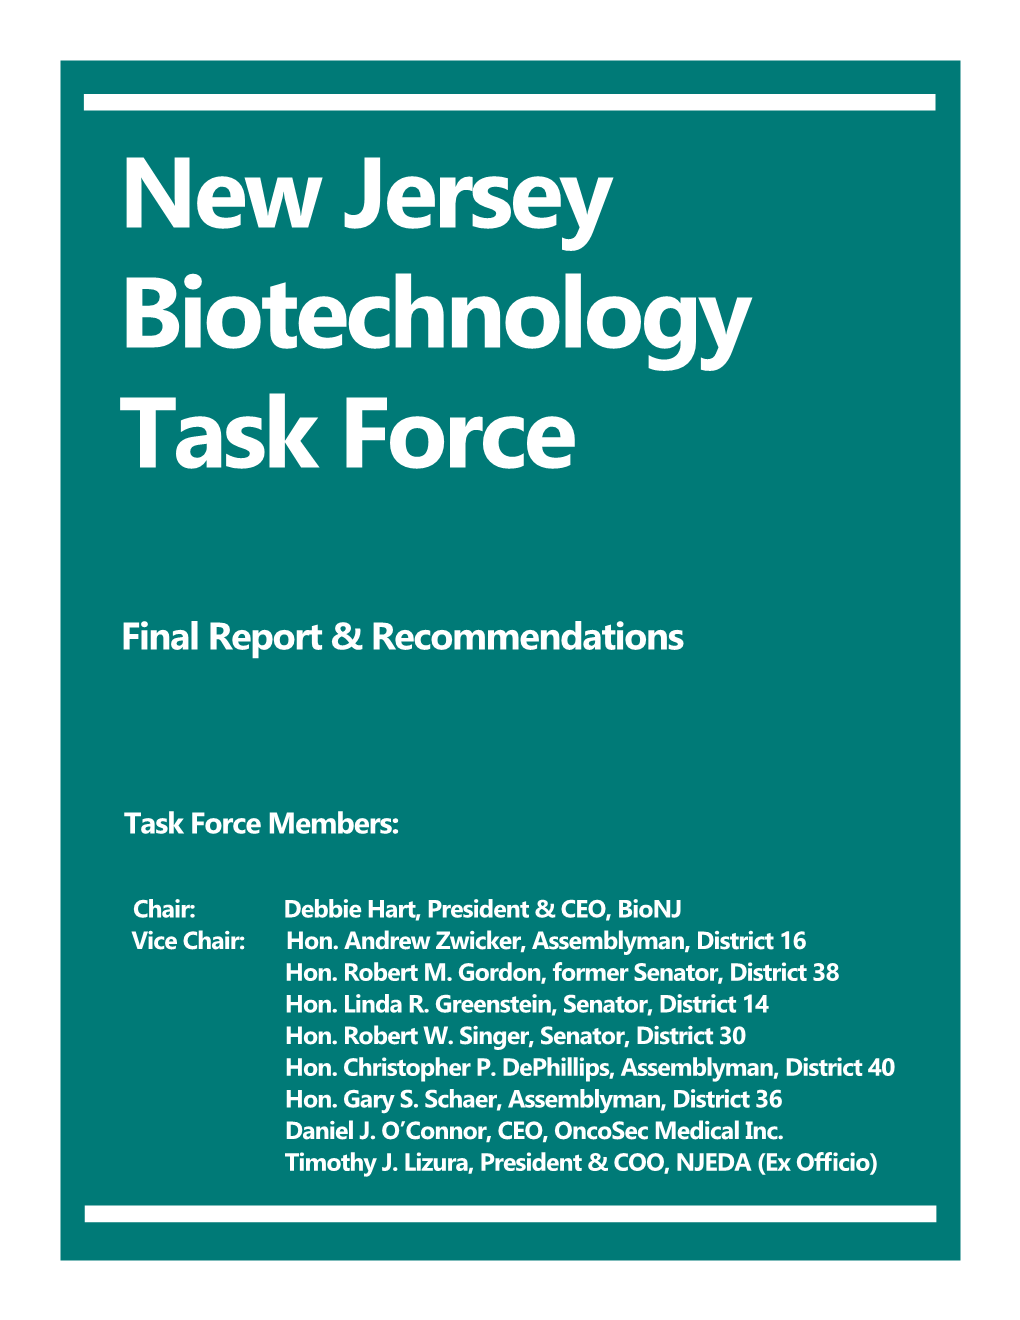 New Jersey Biotechnology Task Force